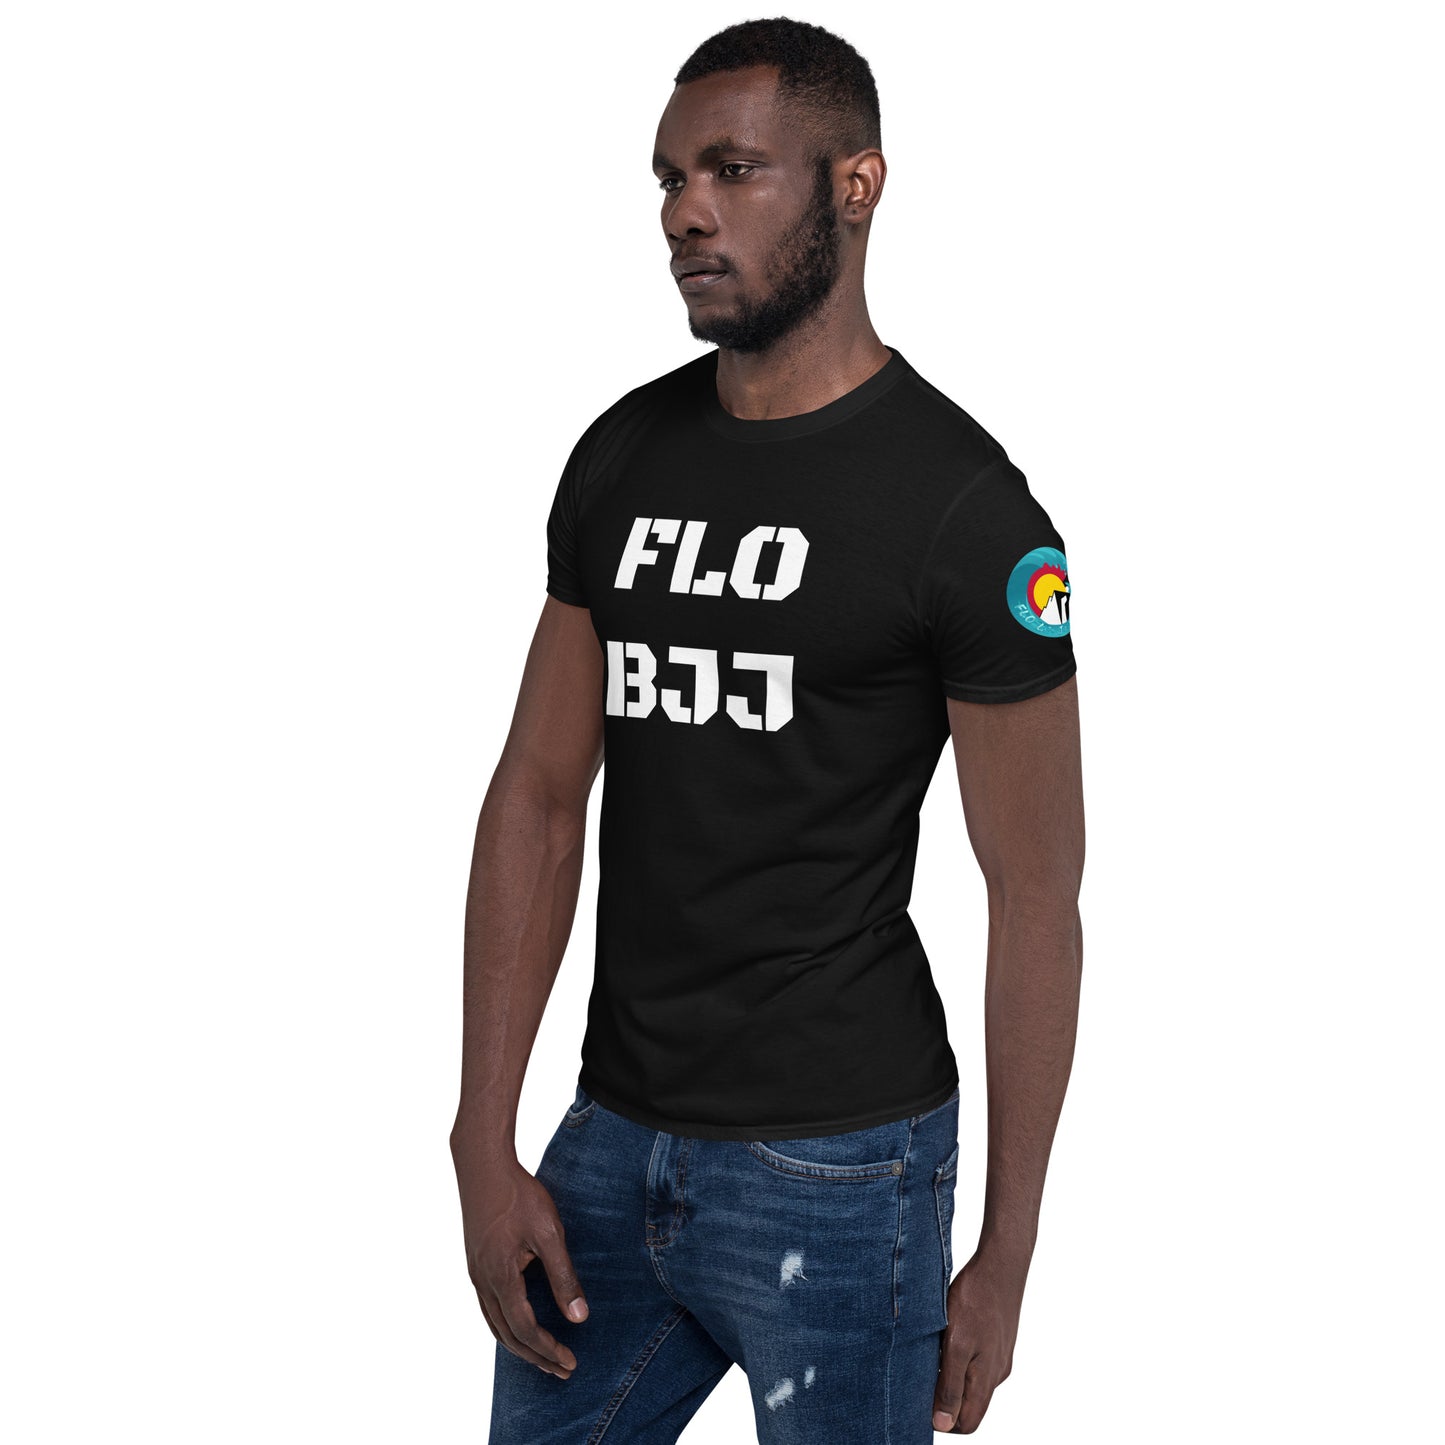 FLO BJJ T-Shirt